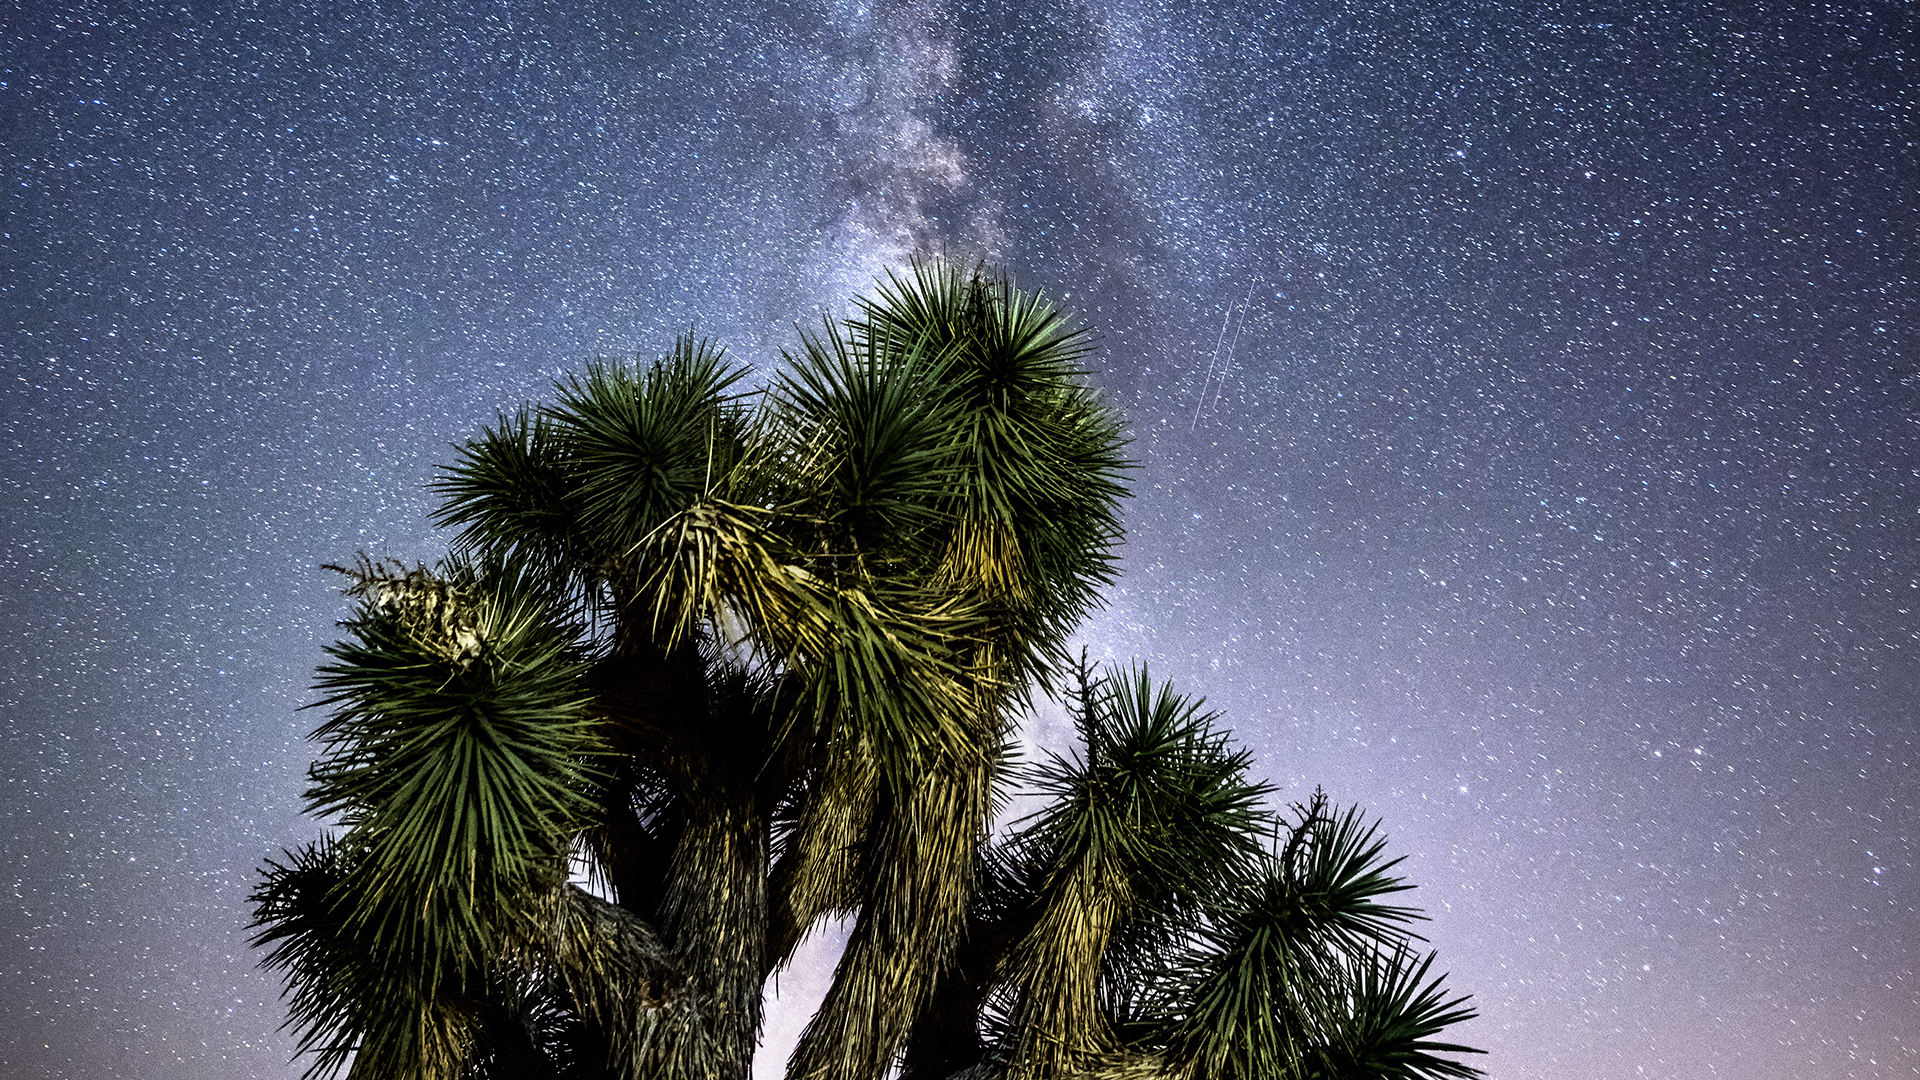 Milky Way view above a Joshua tree